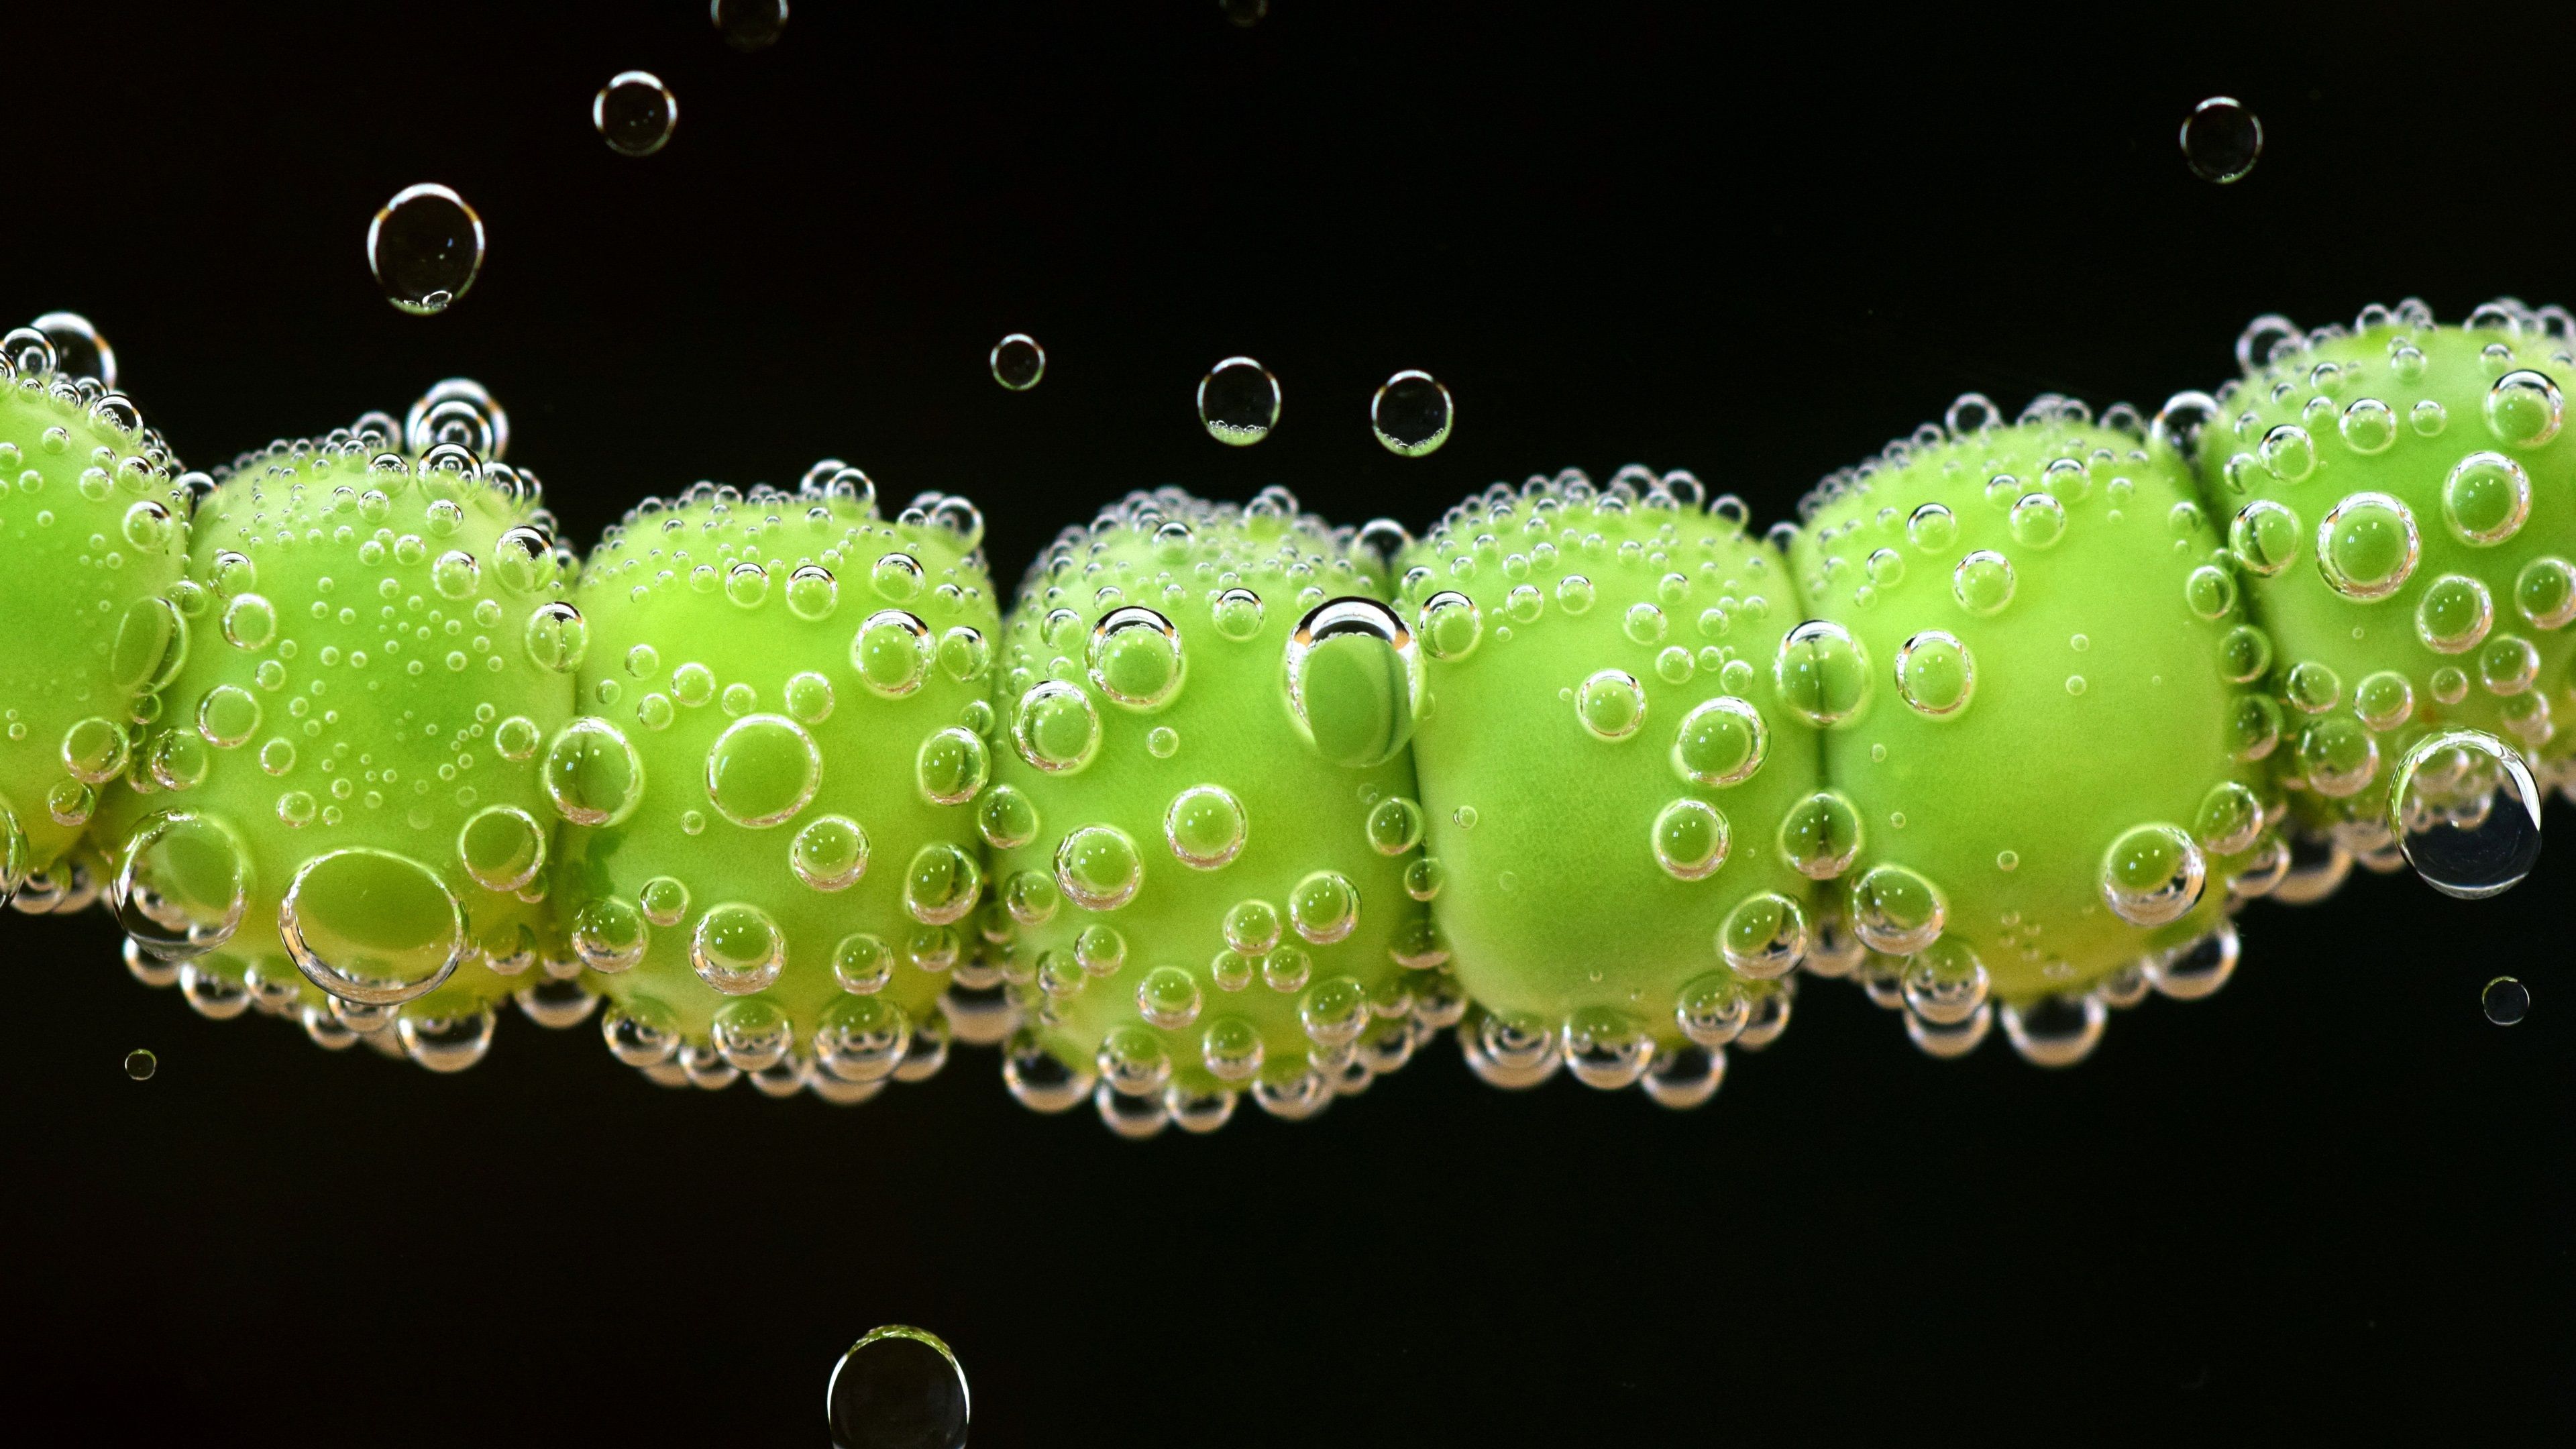 Wallpaper Green beans, bubbles, black background 3840x2160 UHD 4K Picture, Image